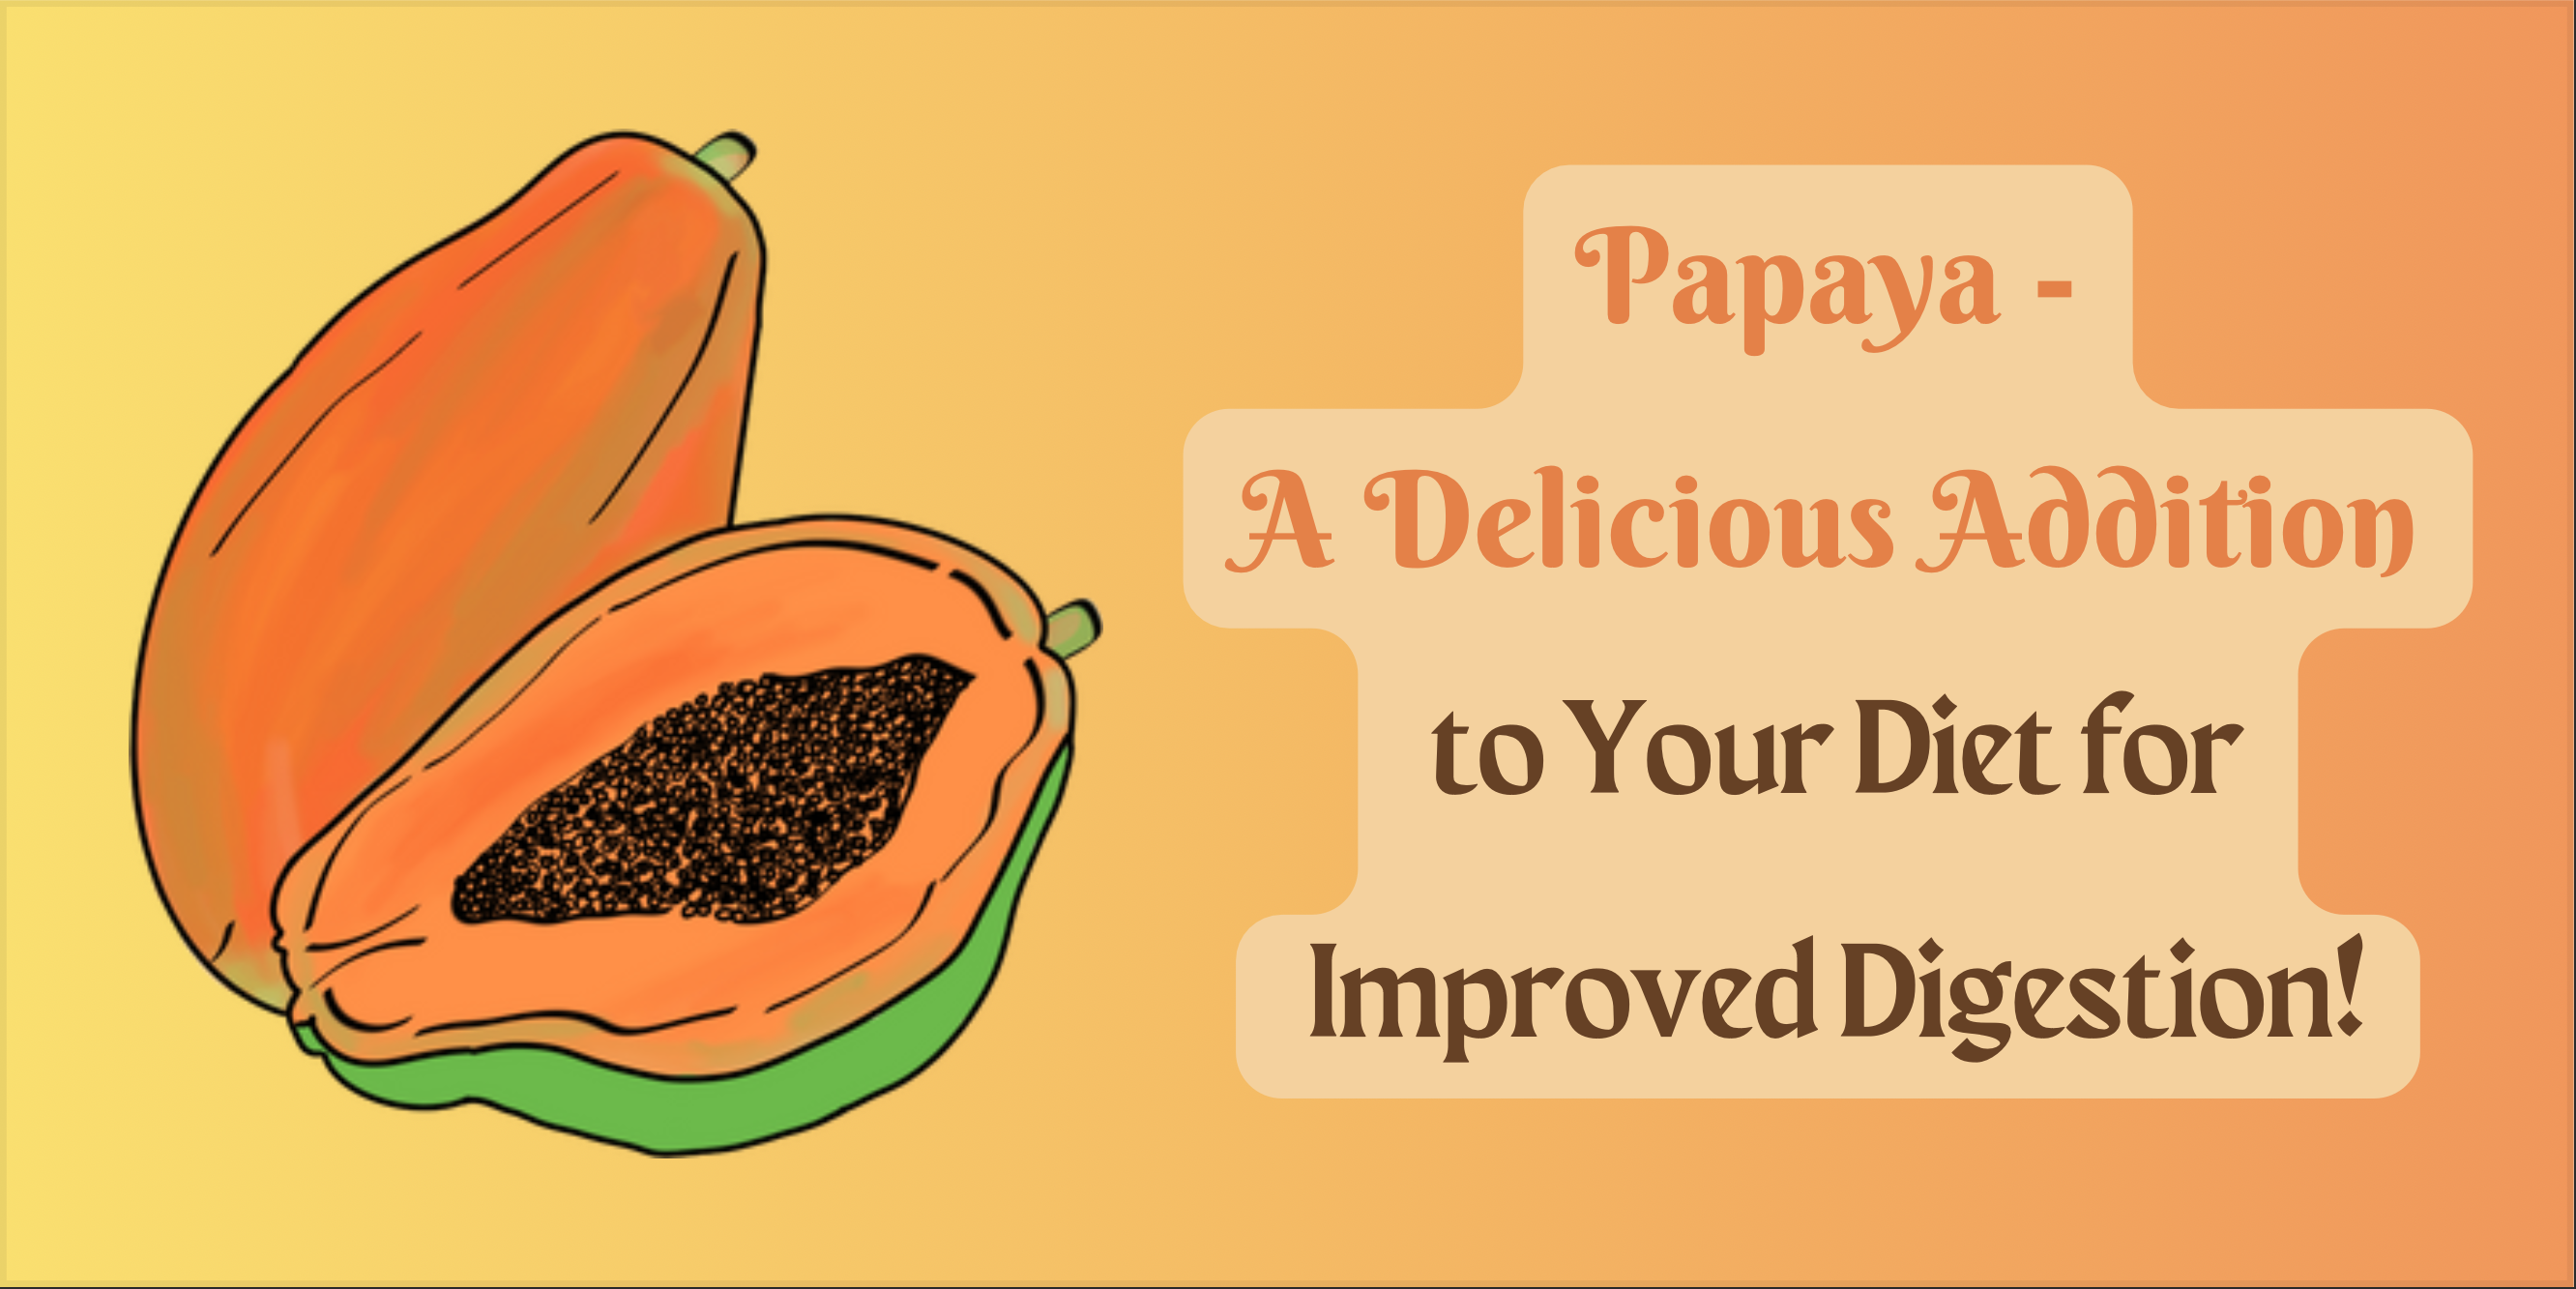 Papaya Seeds Benefits How to Use Papaya Seeds for Hair Growth